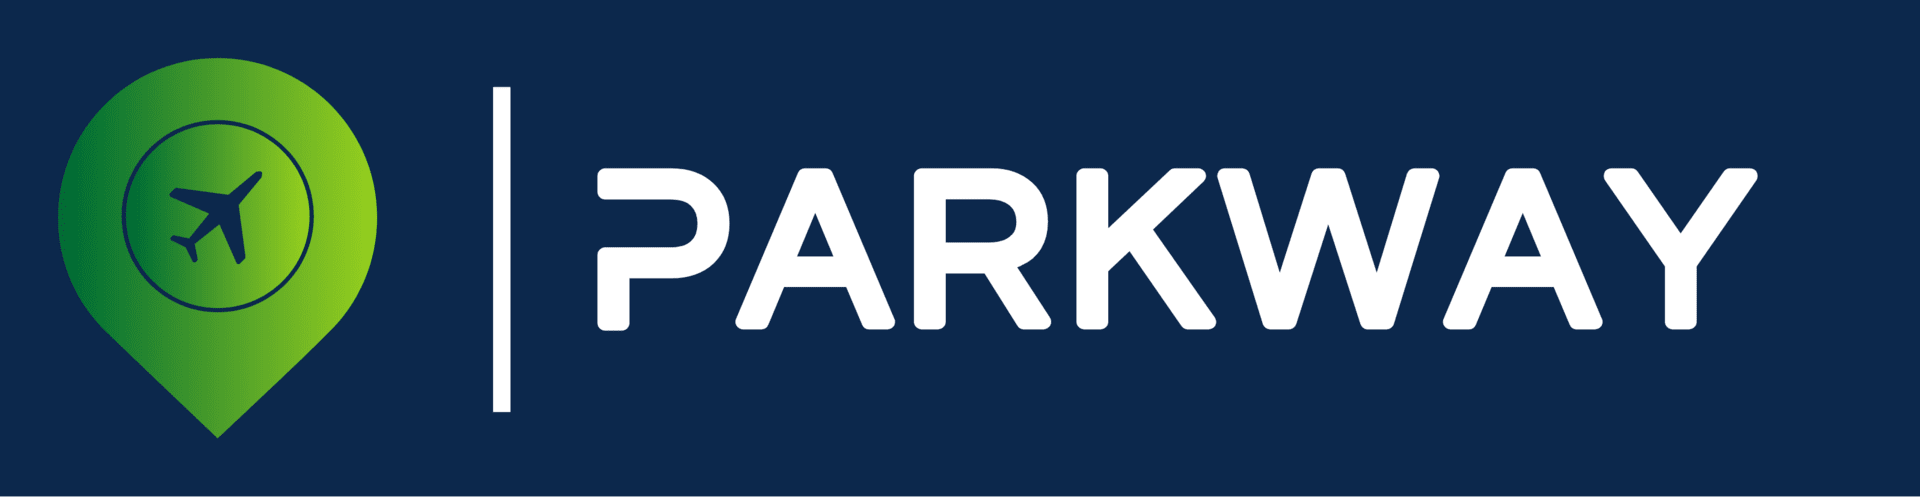 parkway logo